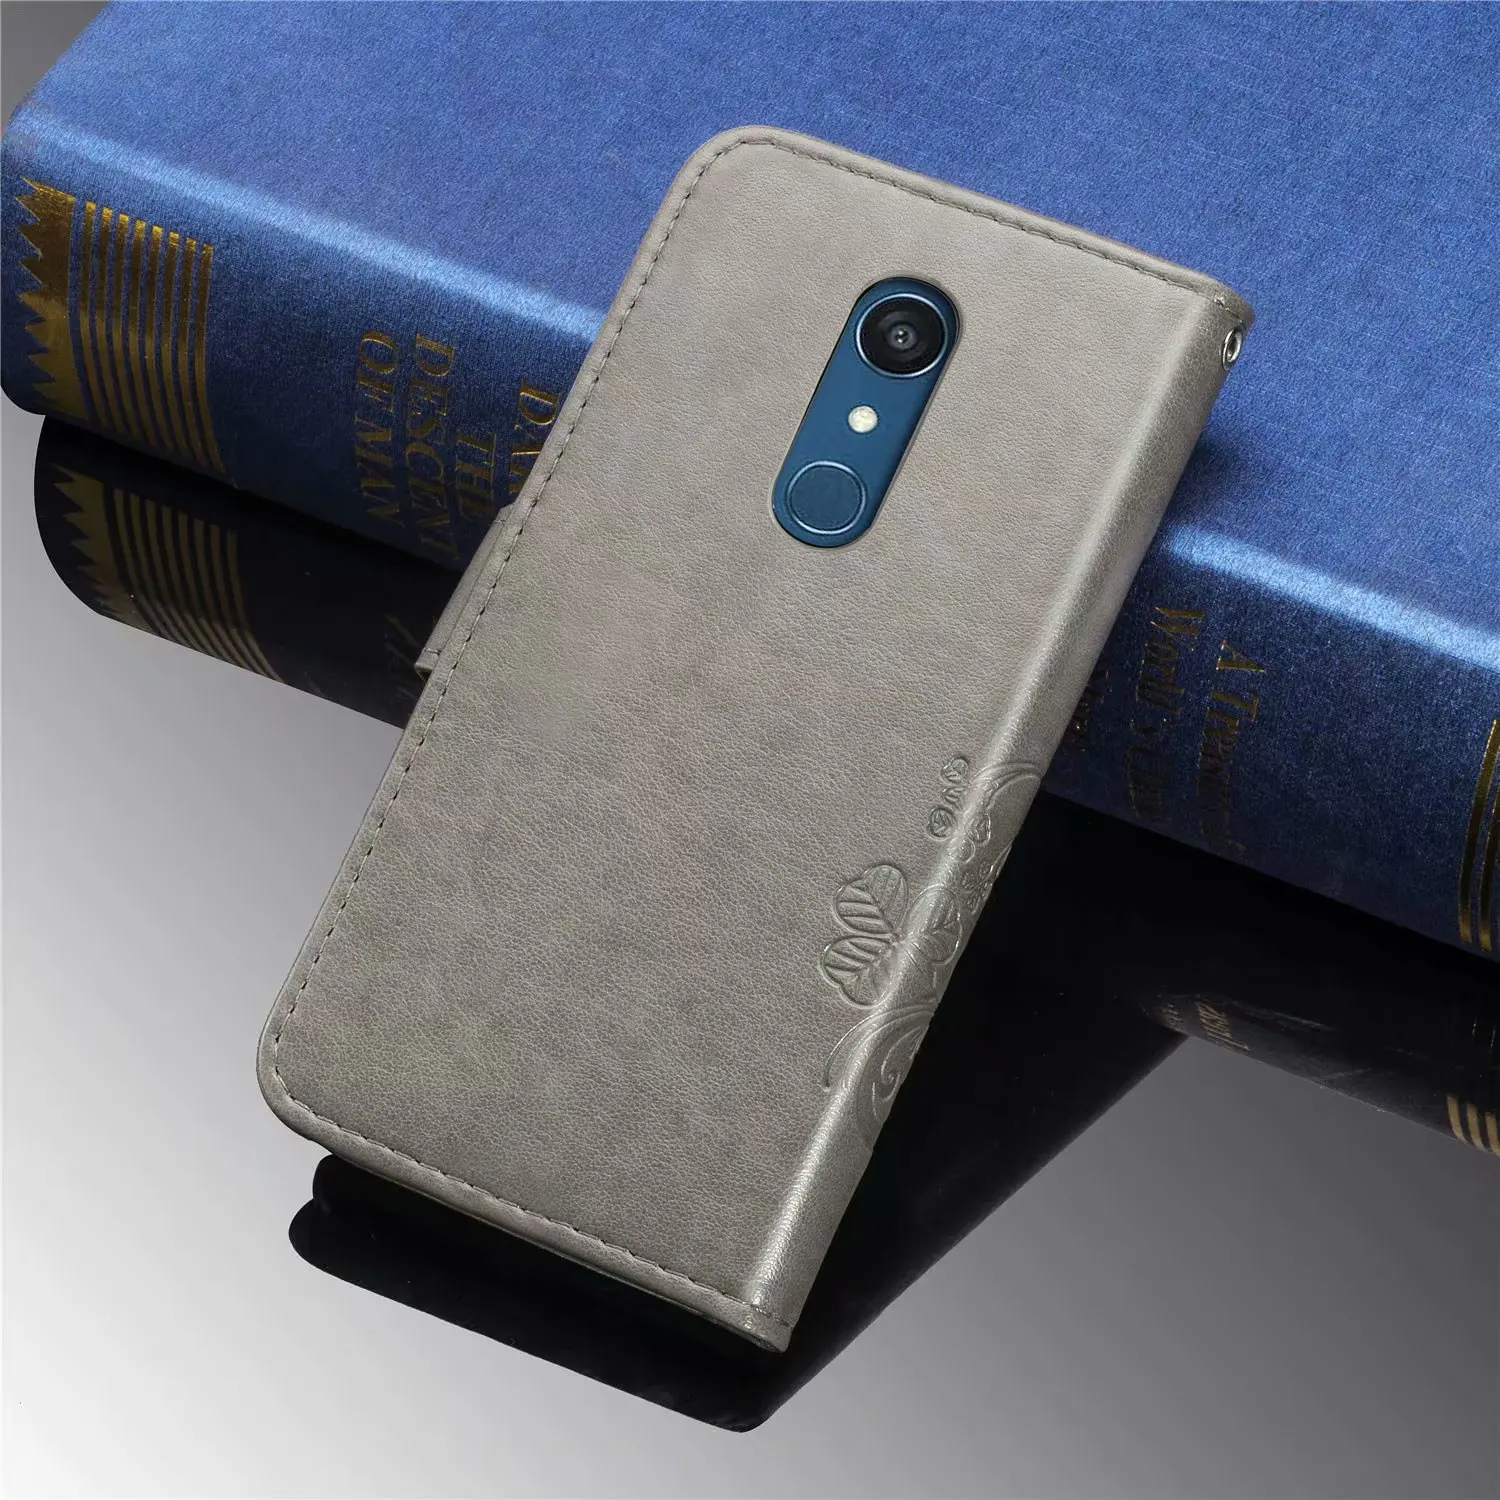 Кожаный бумажник чехол для телефона для LG K8 K10 Q6 Q7 Q9 G7 G8 ThinQ подходит K9 K11 X Мощность 2 3 K30 K50 Q60 Stylo Флип Стенд кожаный чехол